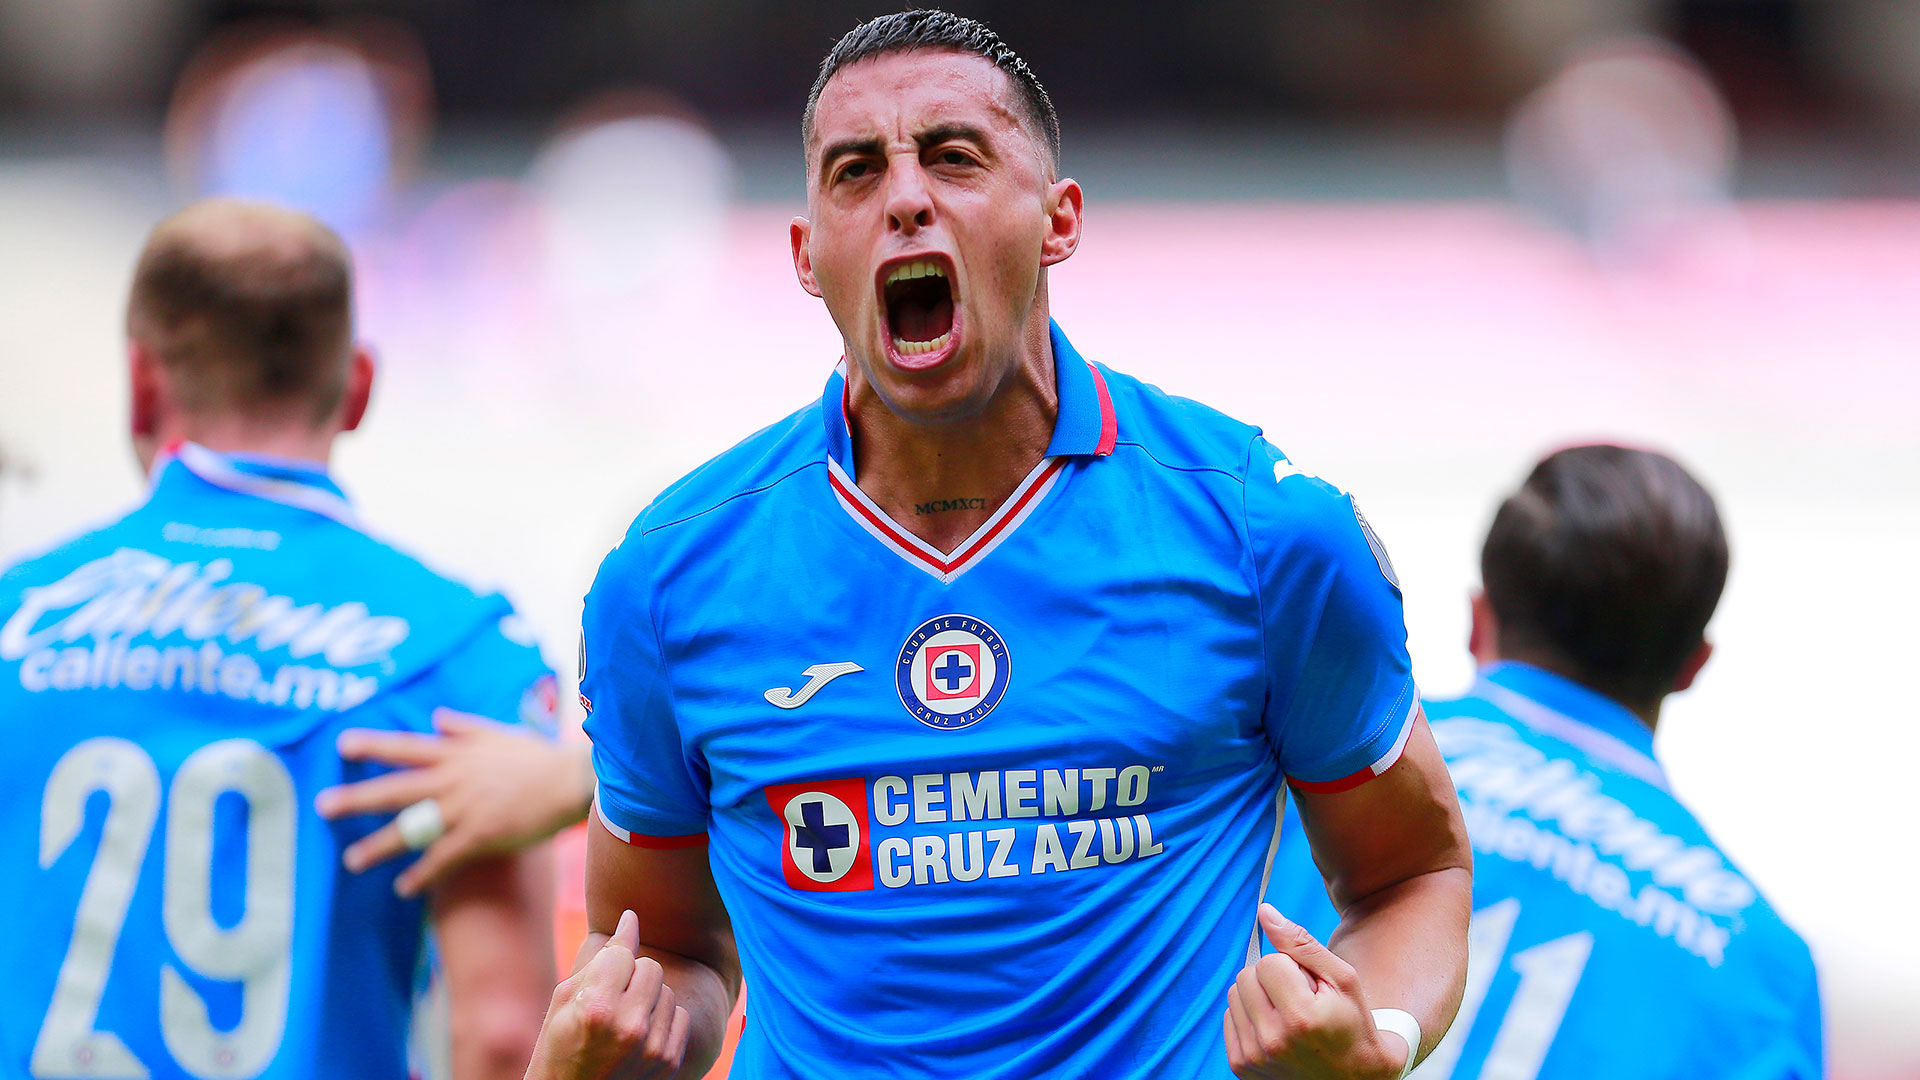 Cruz Azul despidió a Ramiro Funes Mori tras fracasar en la Liga MX